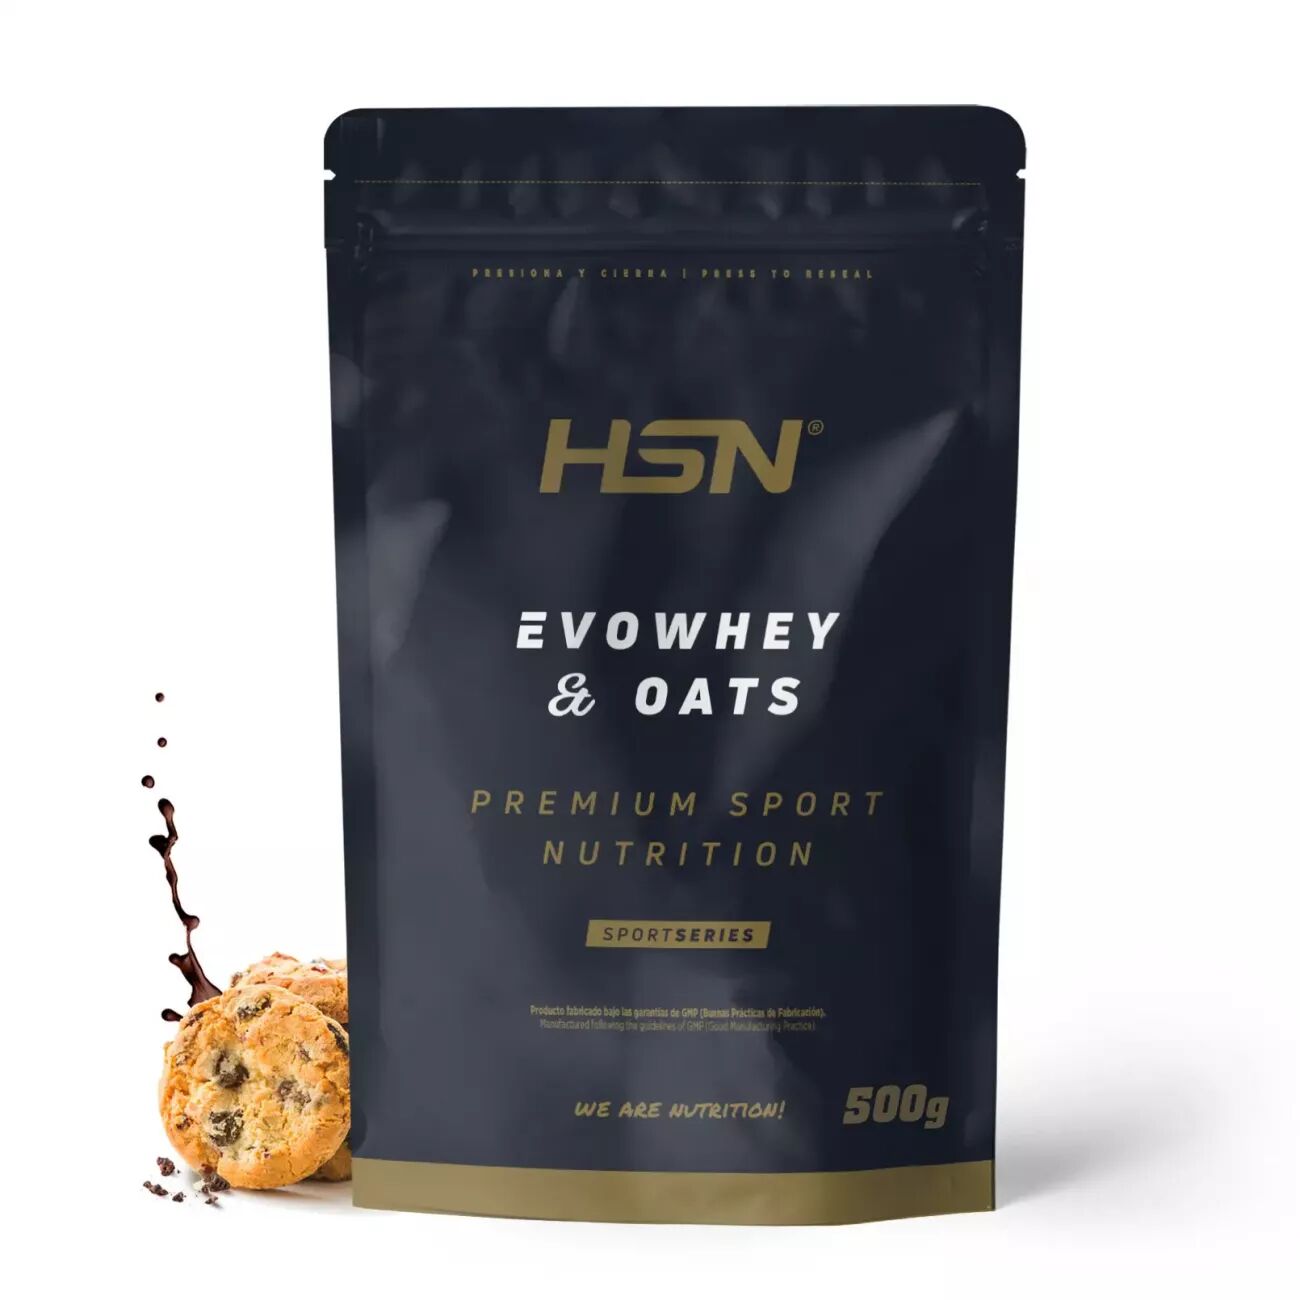 HSN Evowhey & oats 500g chocolate y galletas